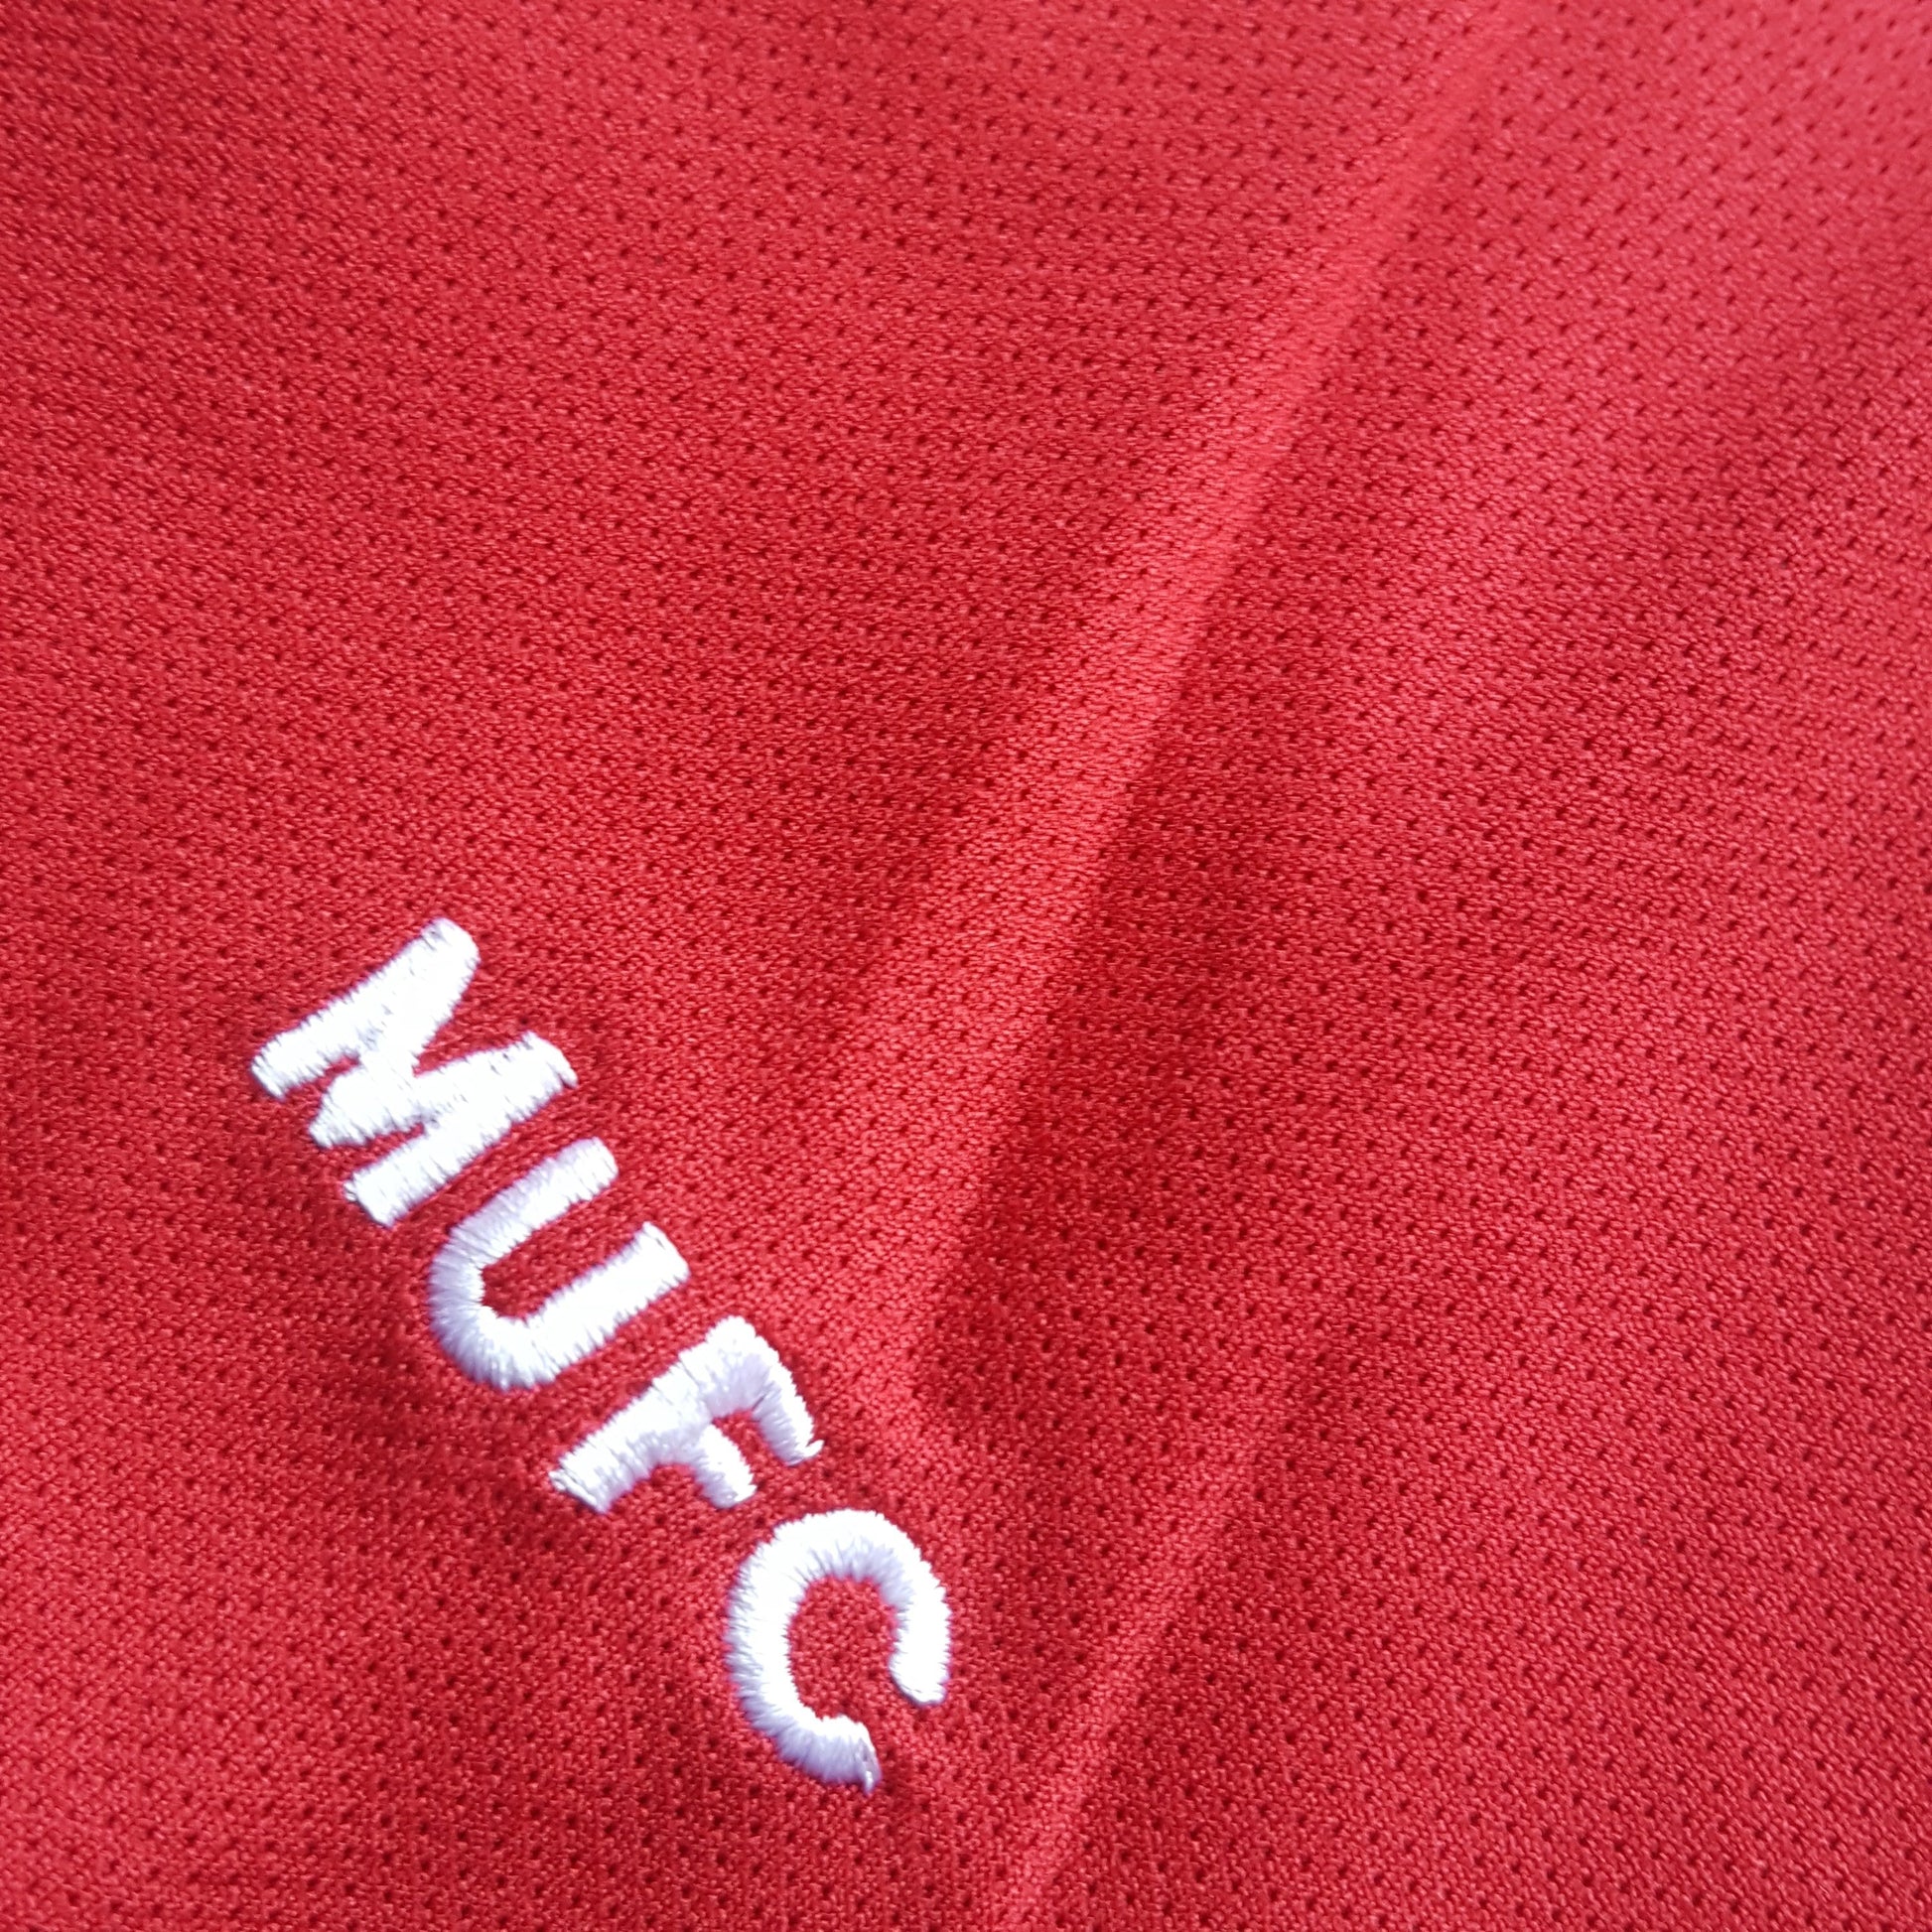 2006/07 Manchester United Home Shirt - ClassicFootballJersey